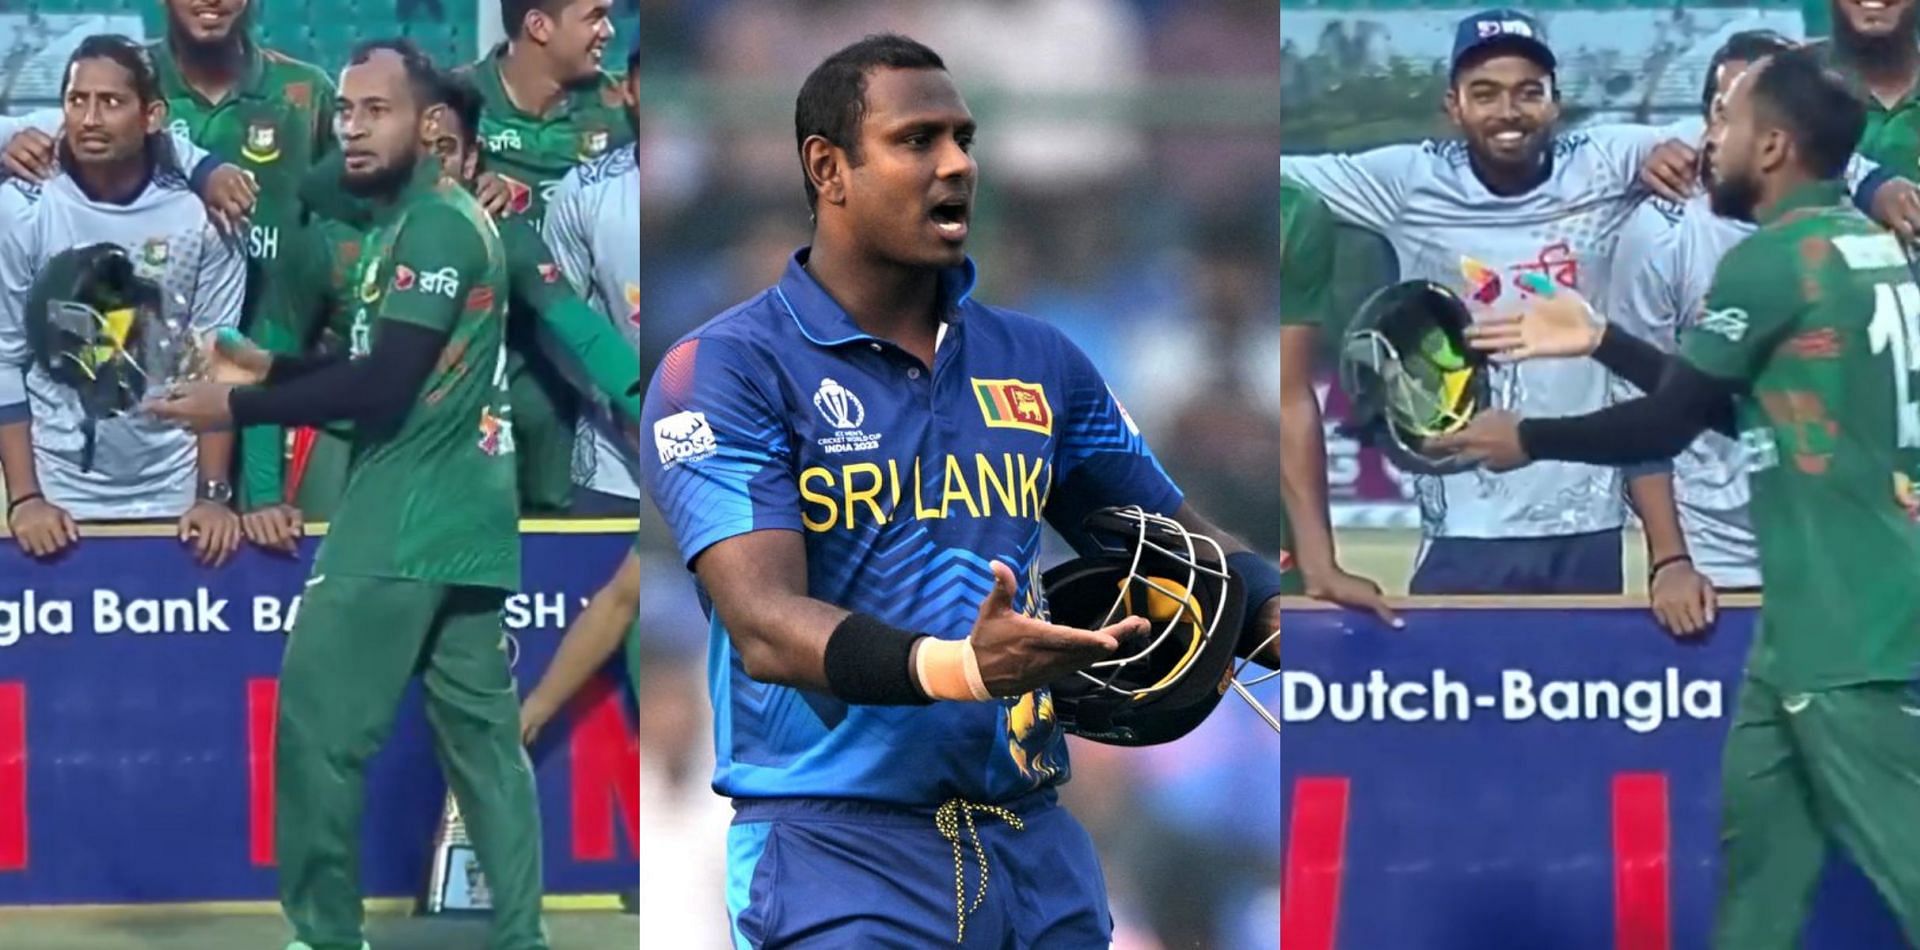 Bangladesh wicket-keeper batsman Mushfiqur Rahim mocked Sri Lankan all-rounder Angelo Mathews during the presentation ceremony upon winning the ODI series 2-1 against Sri Lanka at Chattogram on Monday